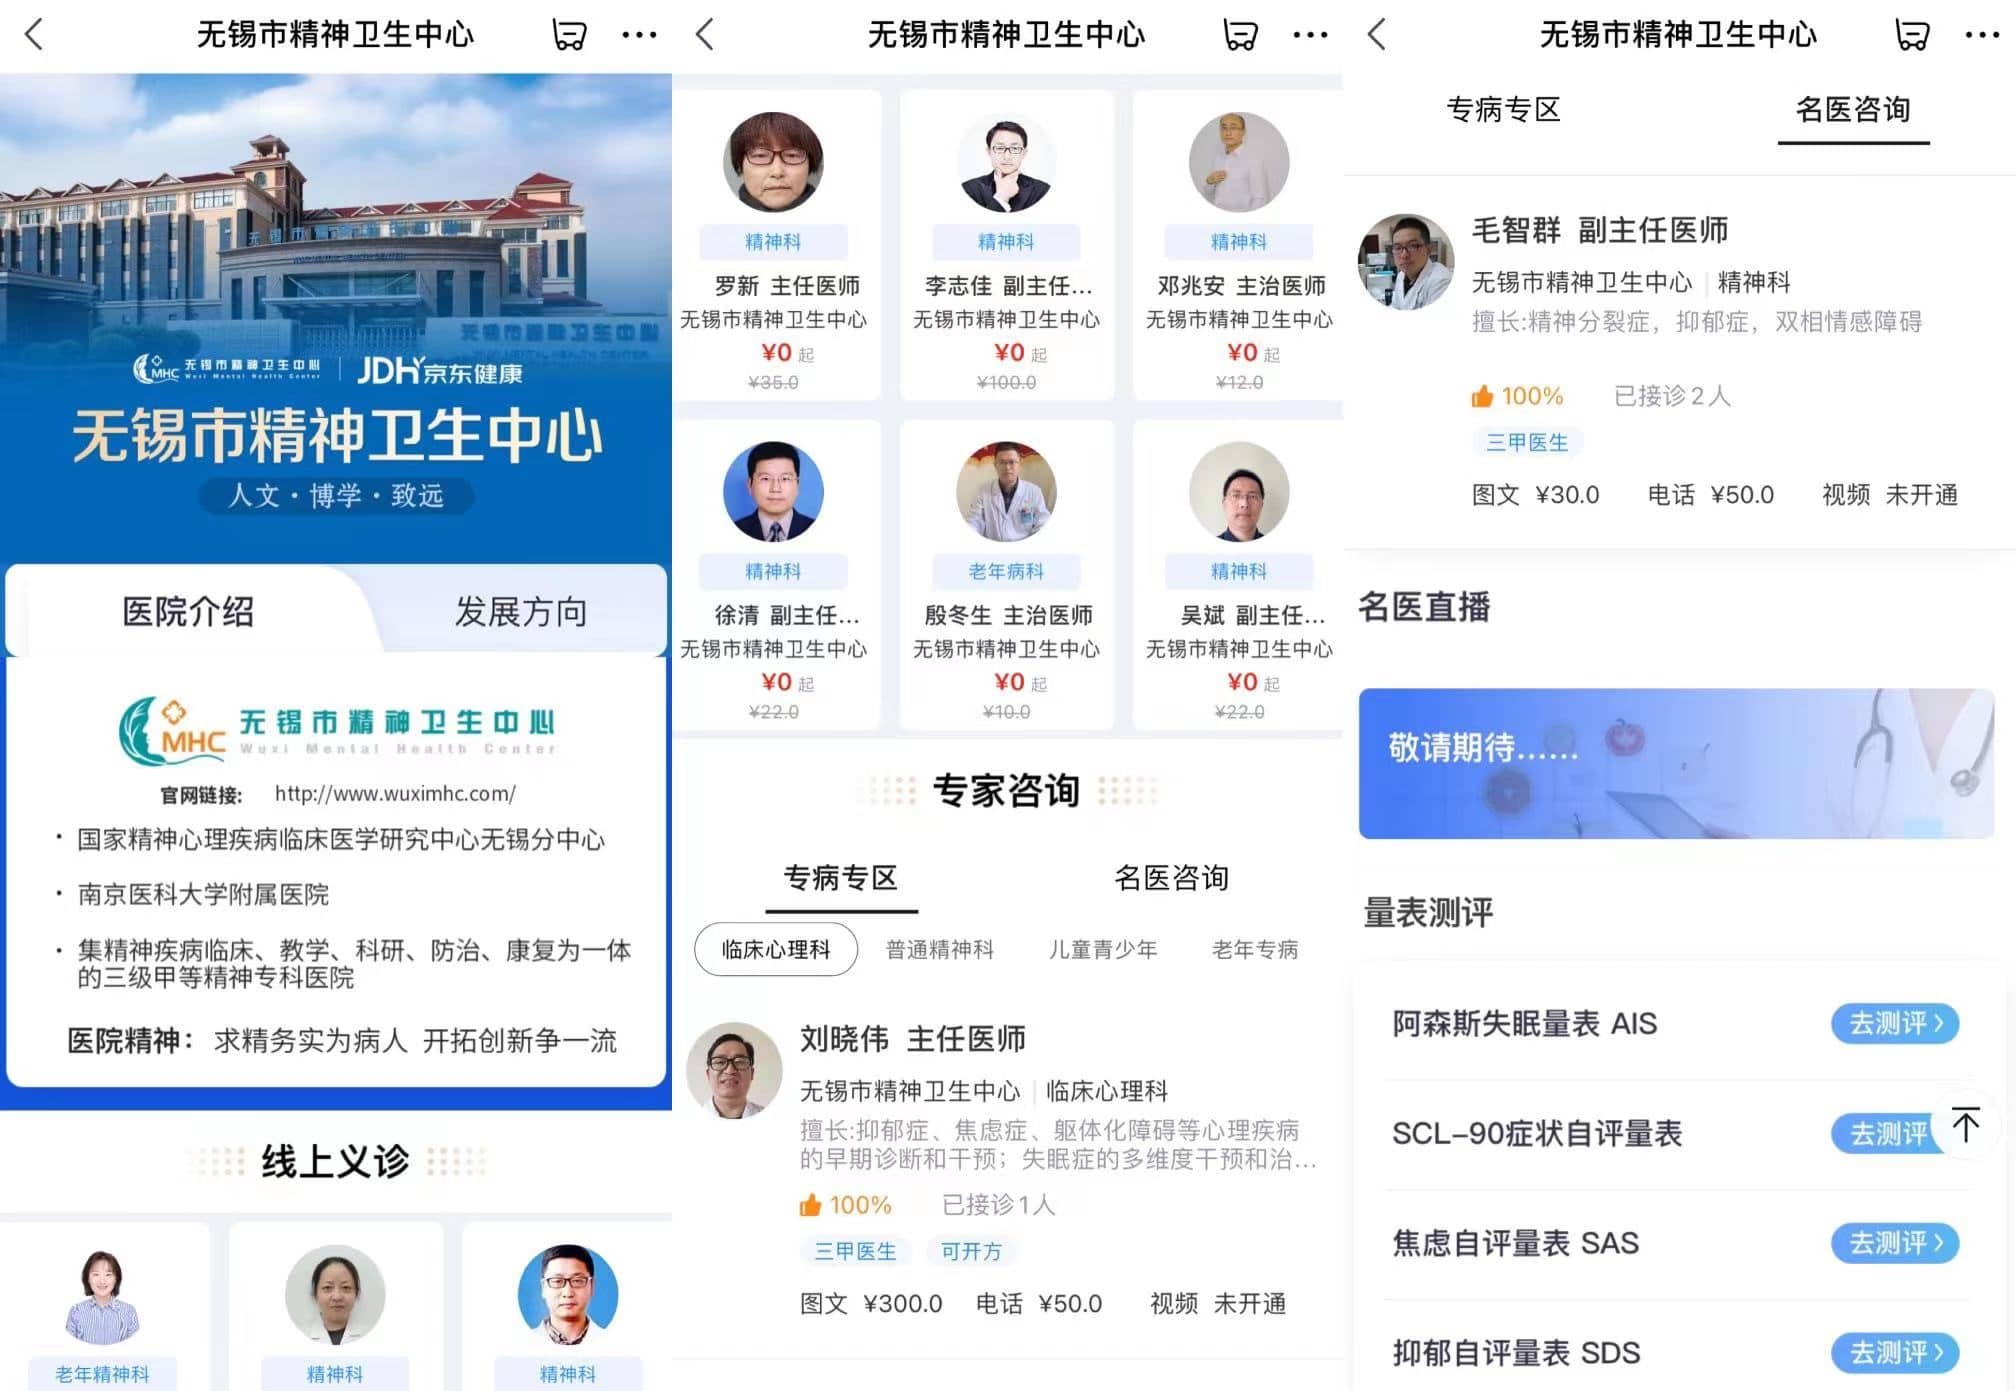 Wuxi Mental Health Center's internet hospital on JD Health's App